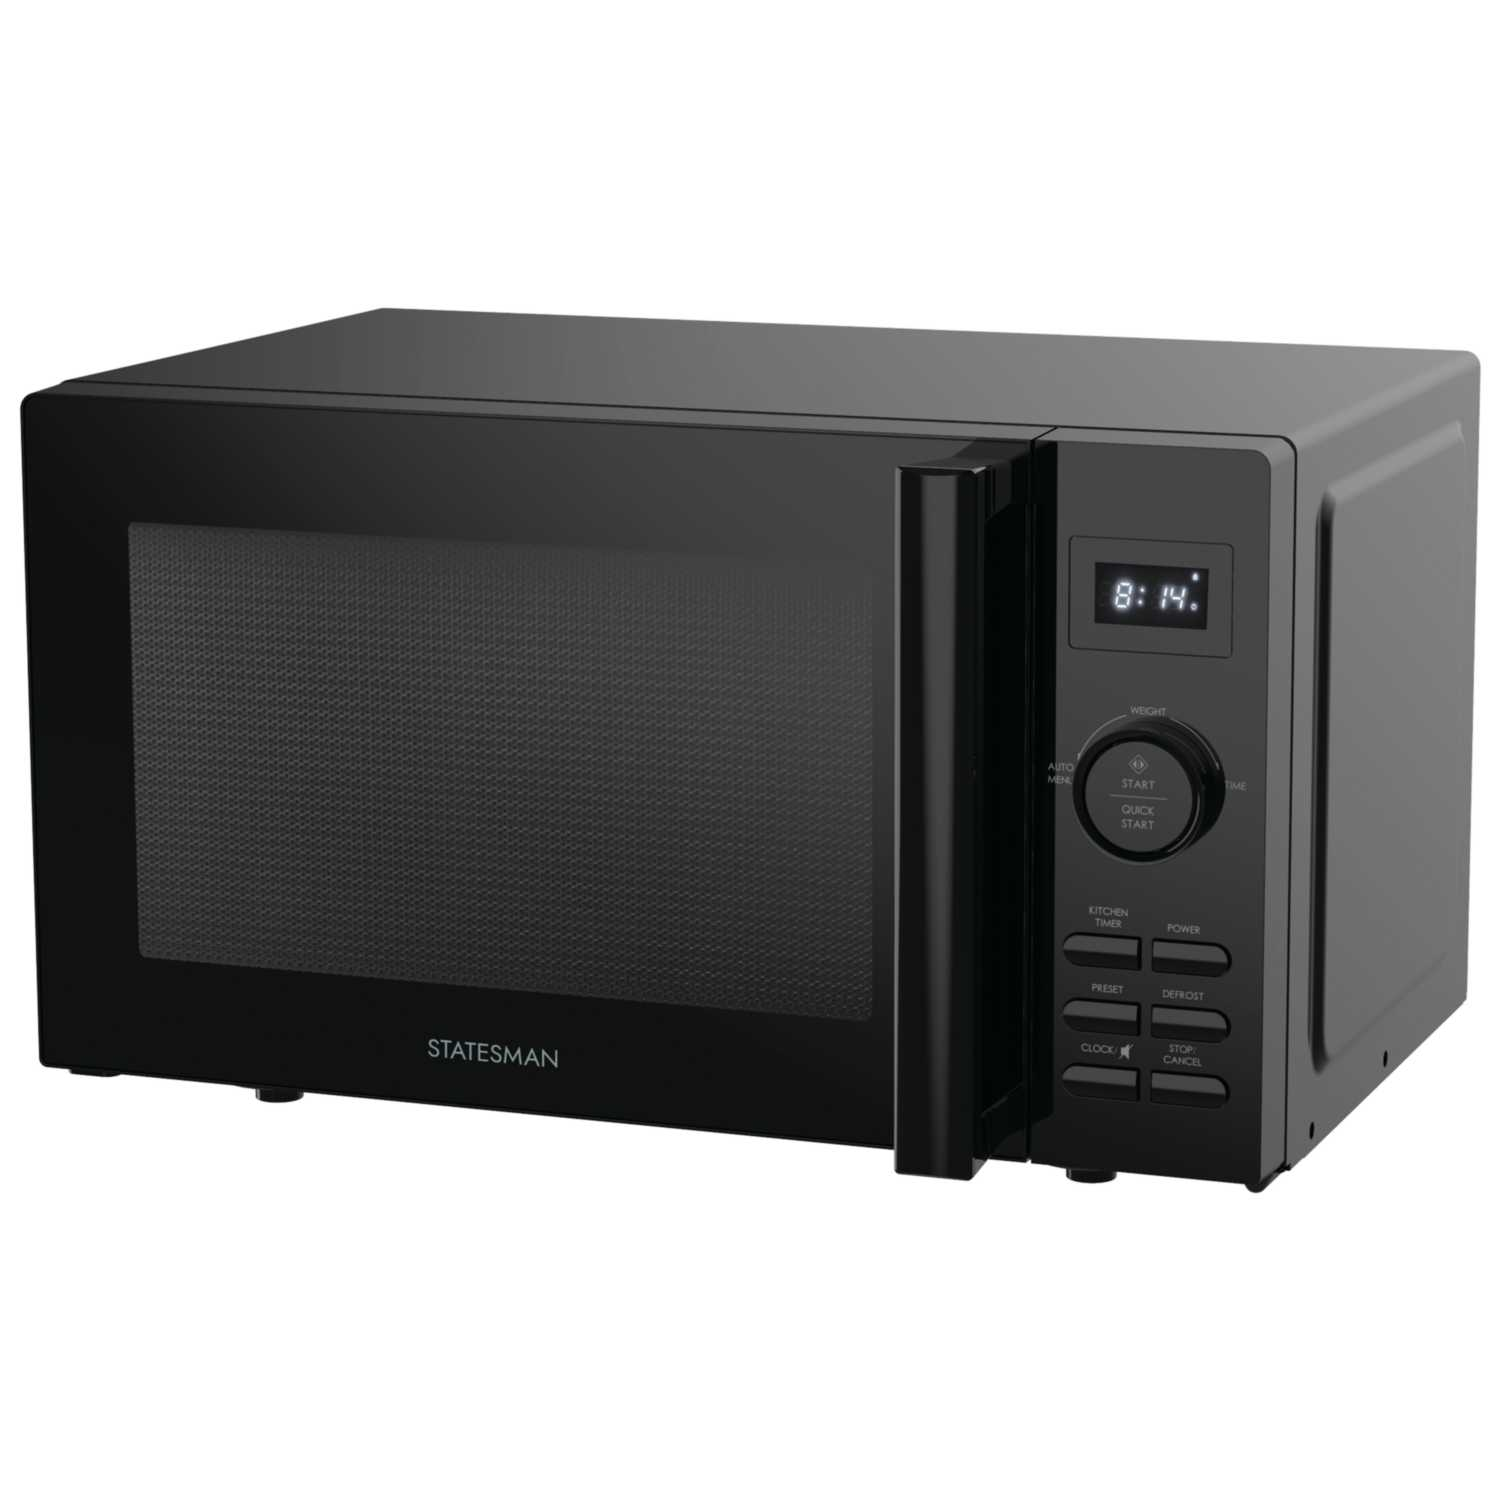 Statesman SKMS0820DSB Solo Digital Microwave, 20 Litre, 800W, Stainless Steel Interior, Black